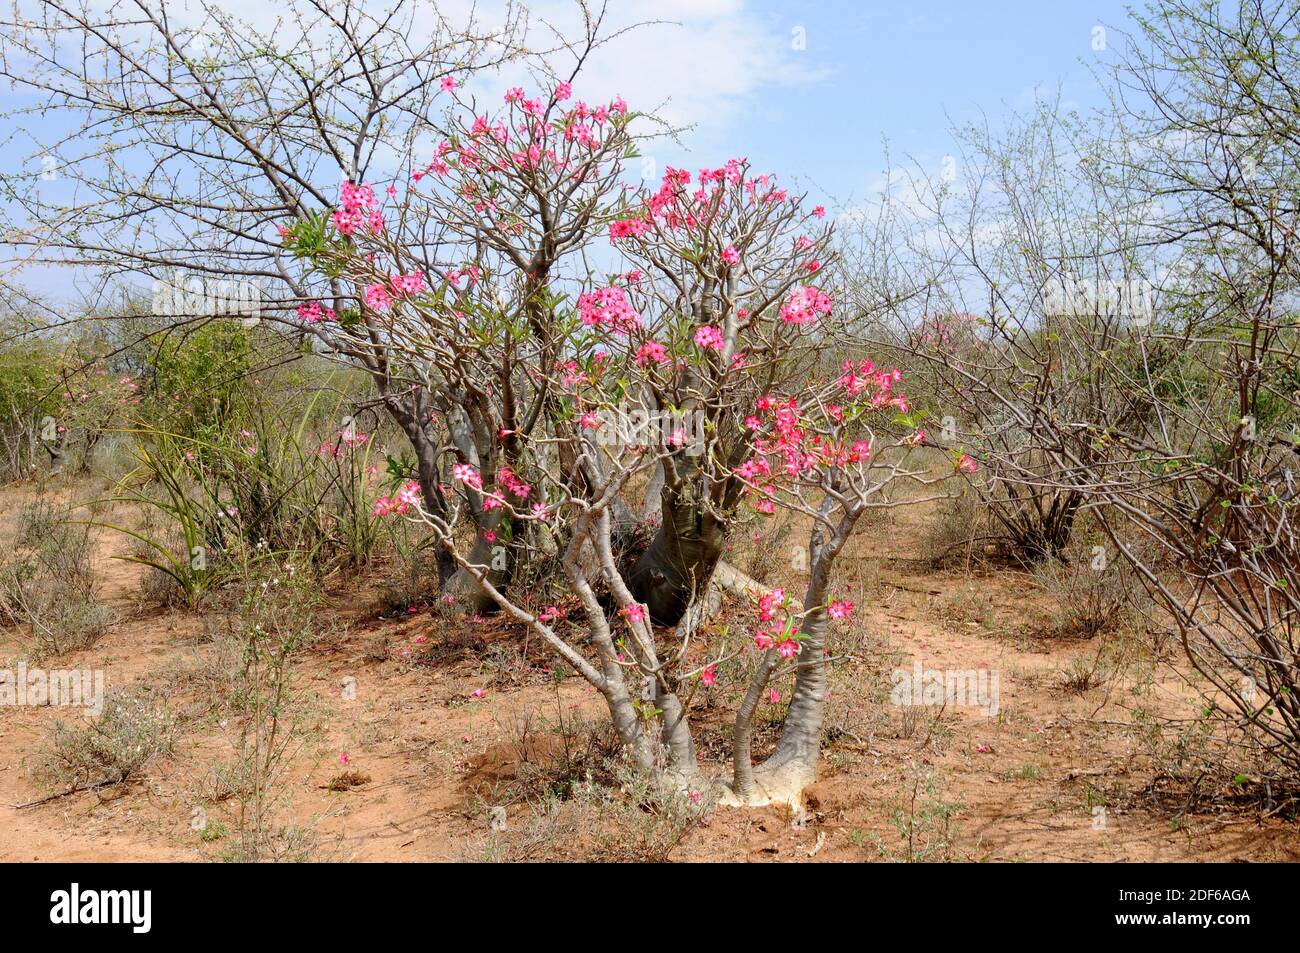 Desert rose, impala lily, mock azalea or sabi star (Adenium obesum somalense) is native to Ethiopia, Somalia and Sudan. This succulent shrub contains Stock Photo